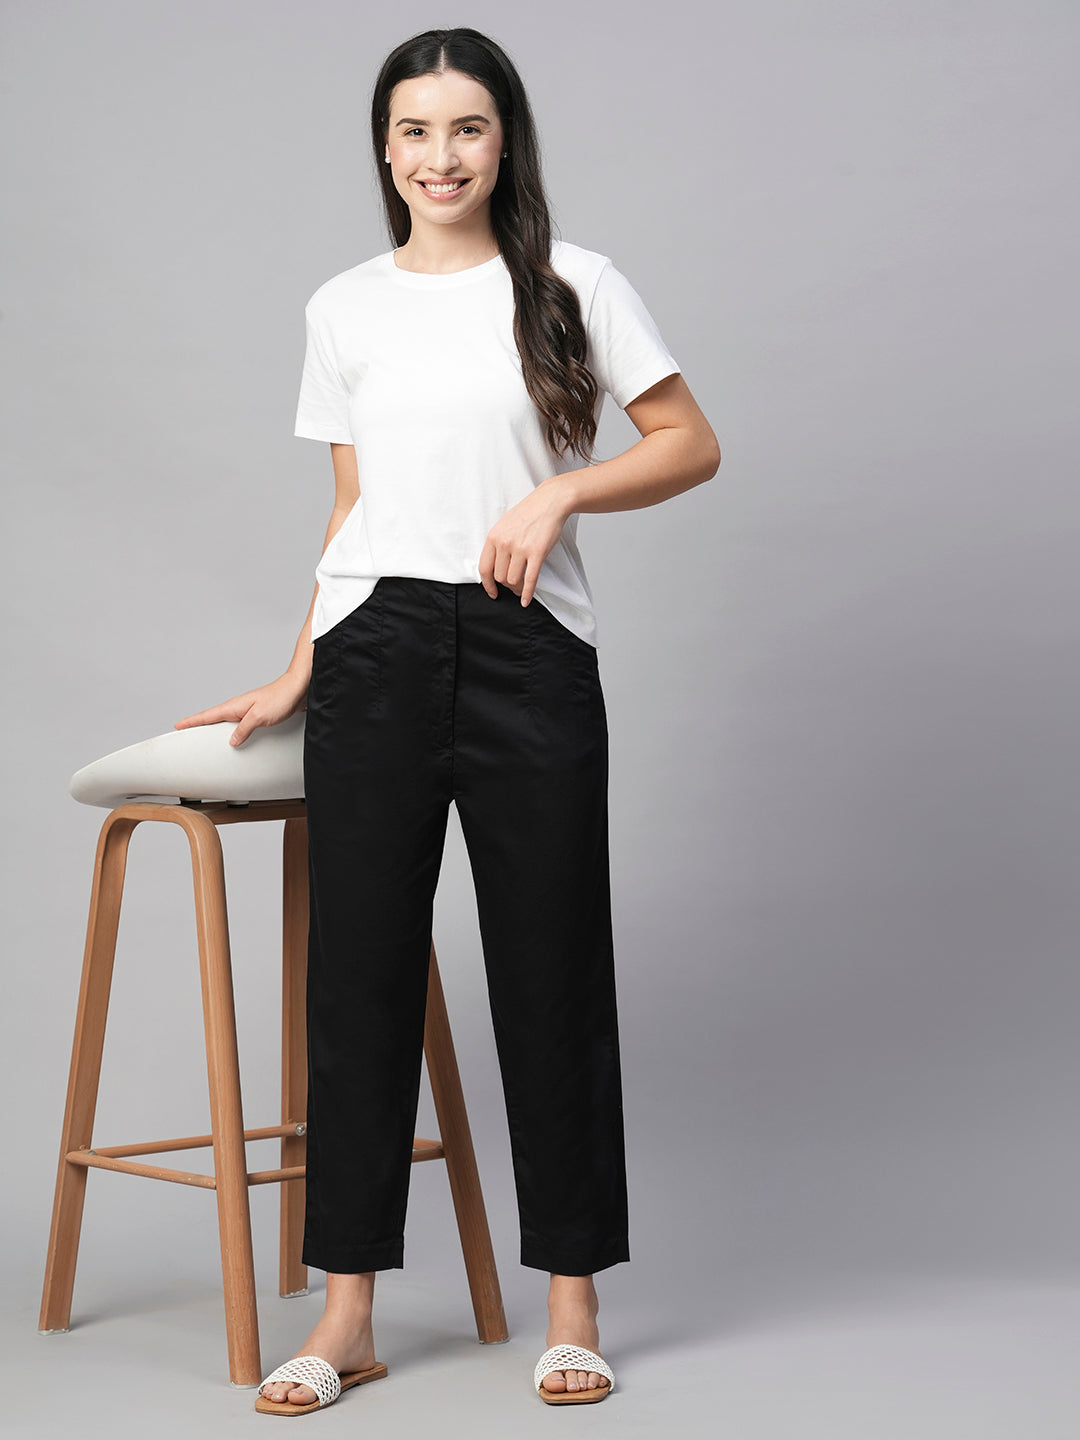 Women's Black Cotton Elastane Slim Fit Pant